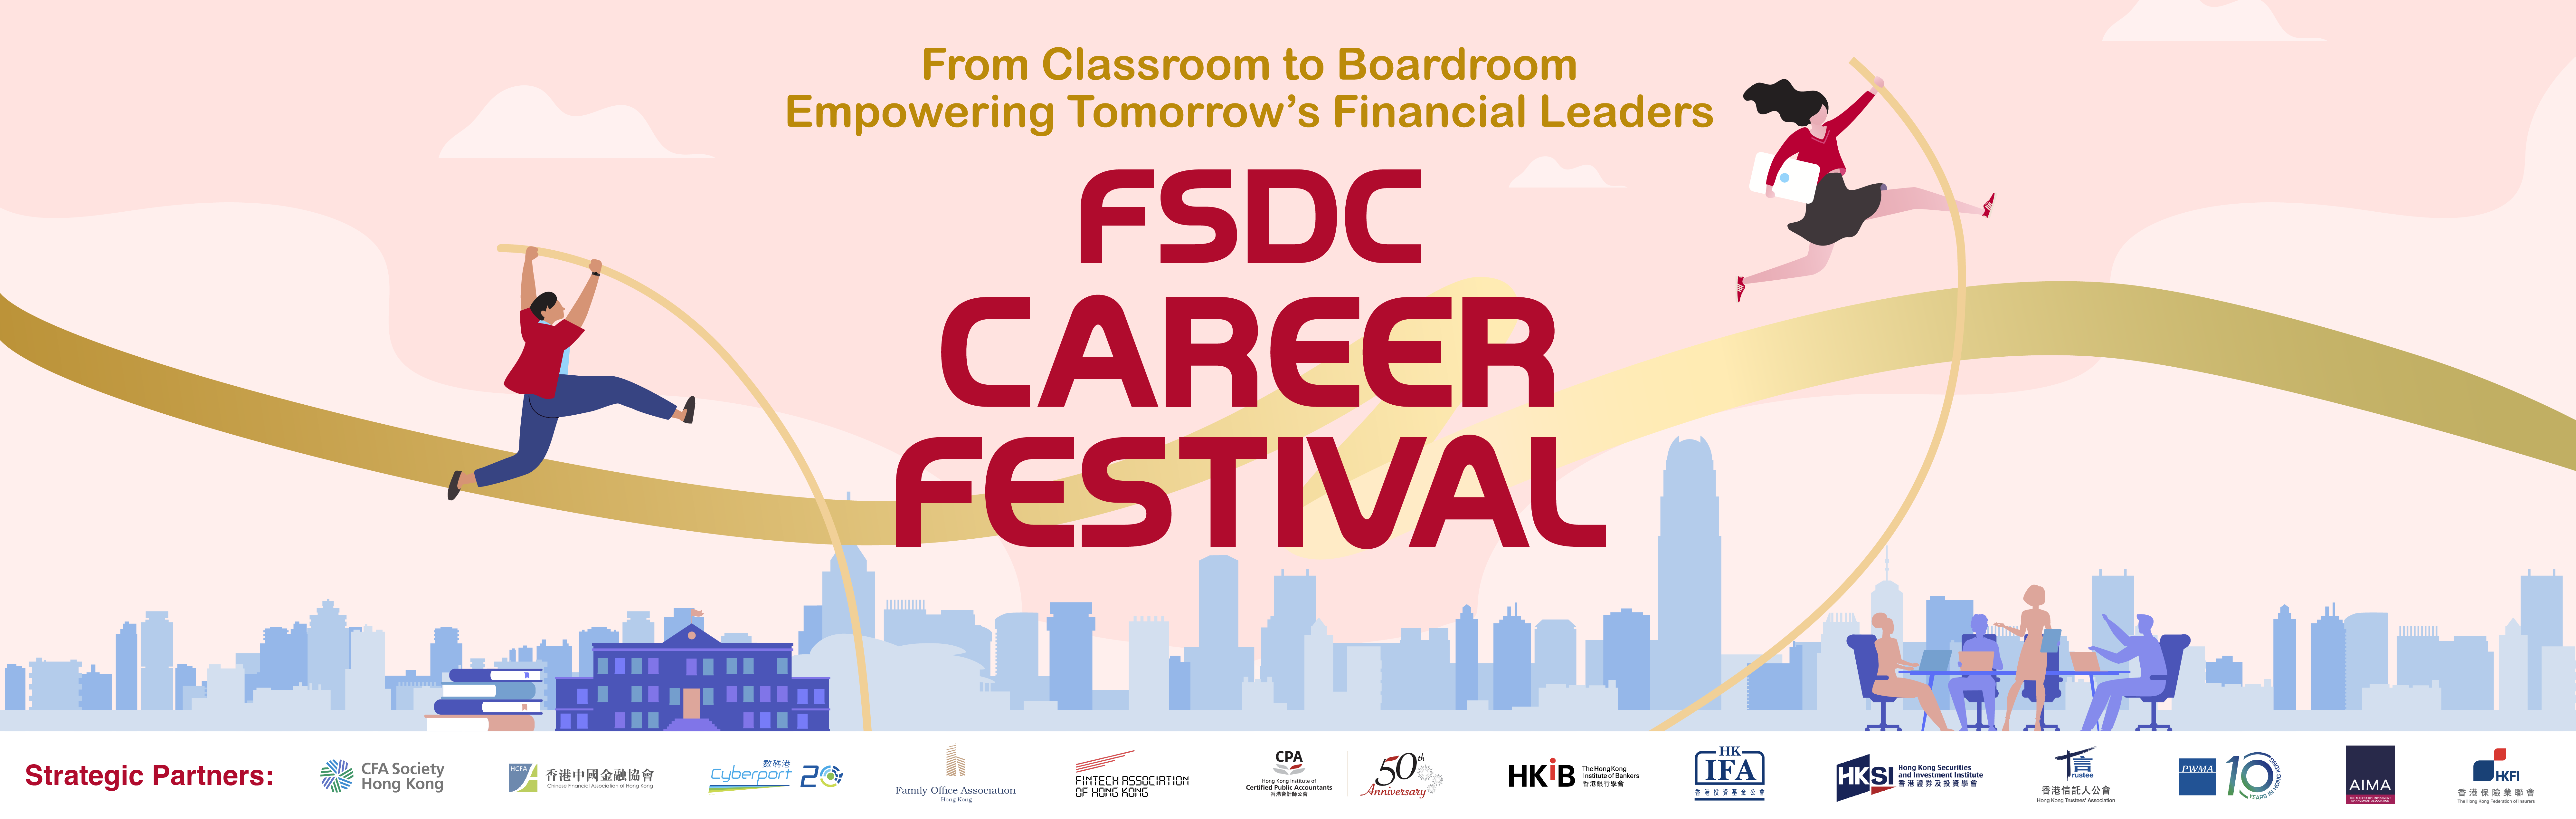 FSDV Careerfest Web 0918